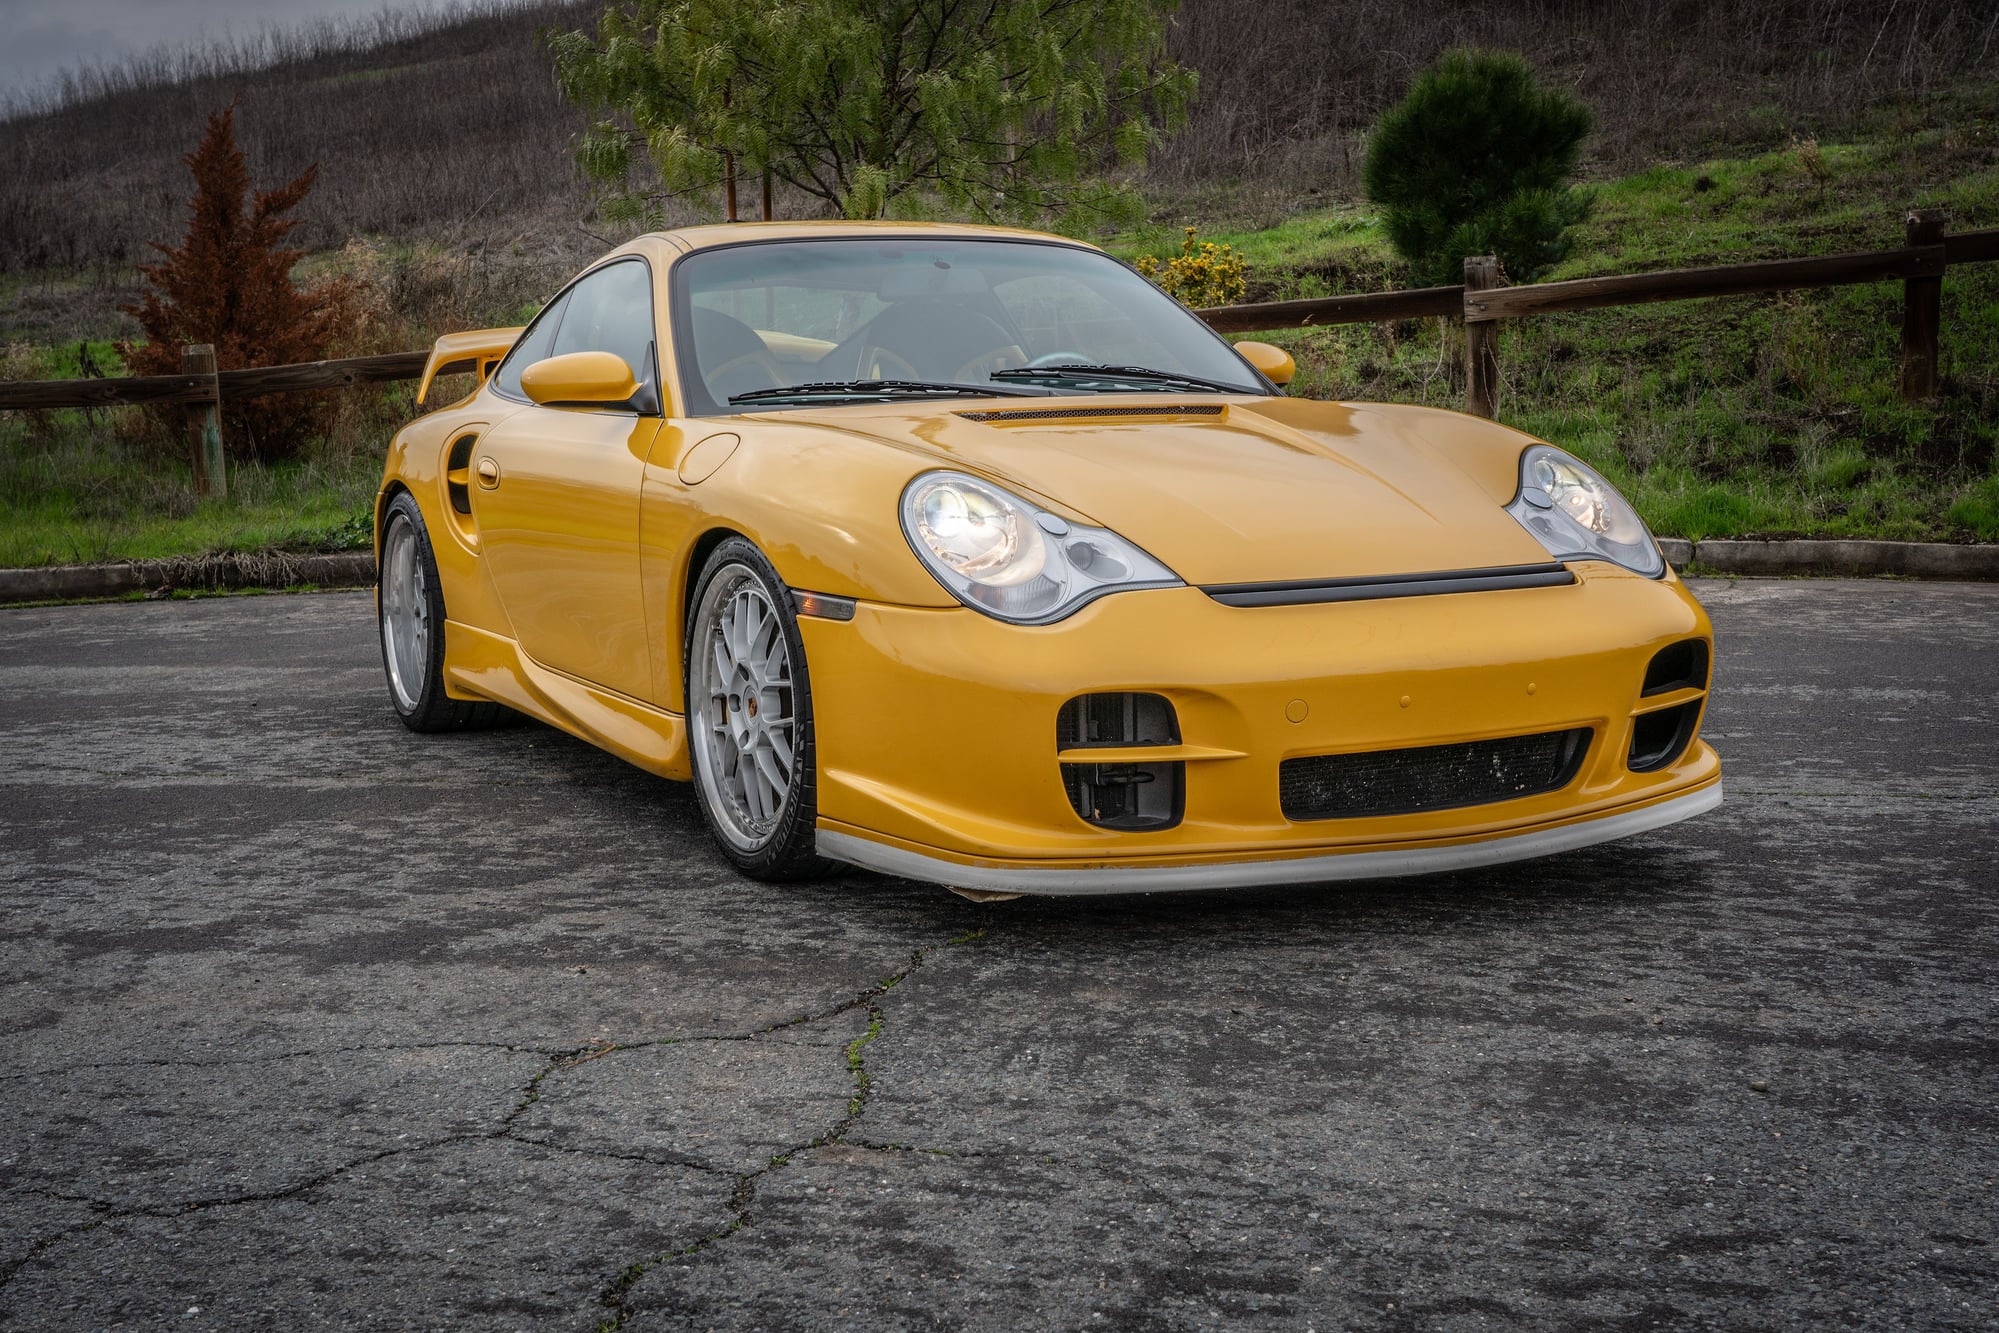 2001 Shark Werks Speed Yellow 911 Turbo on Bring a Trailer 